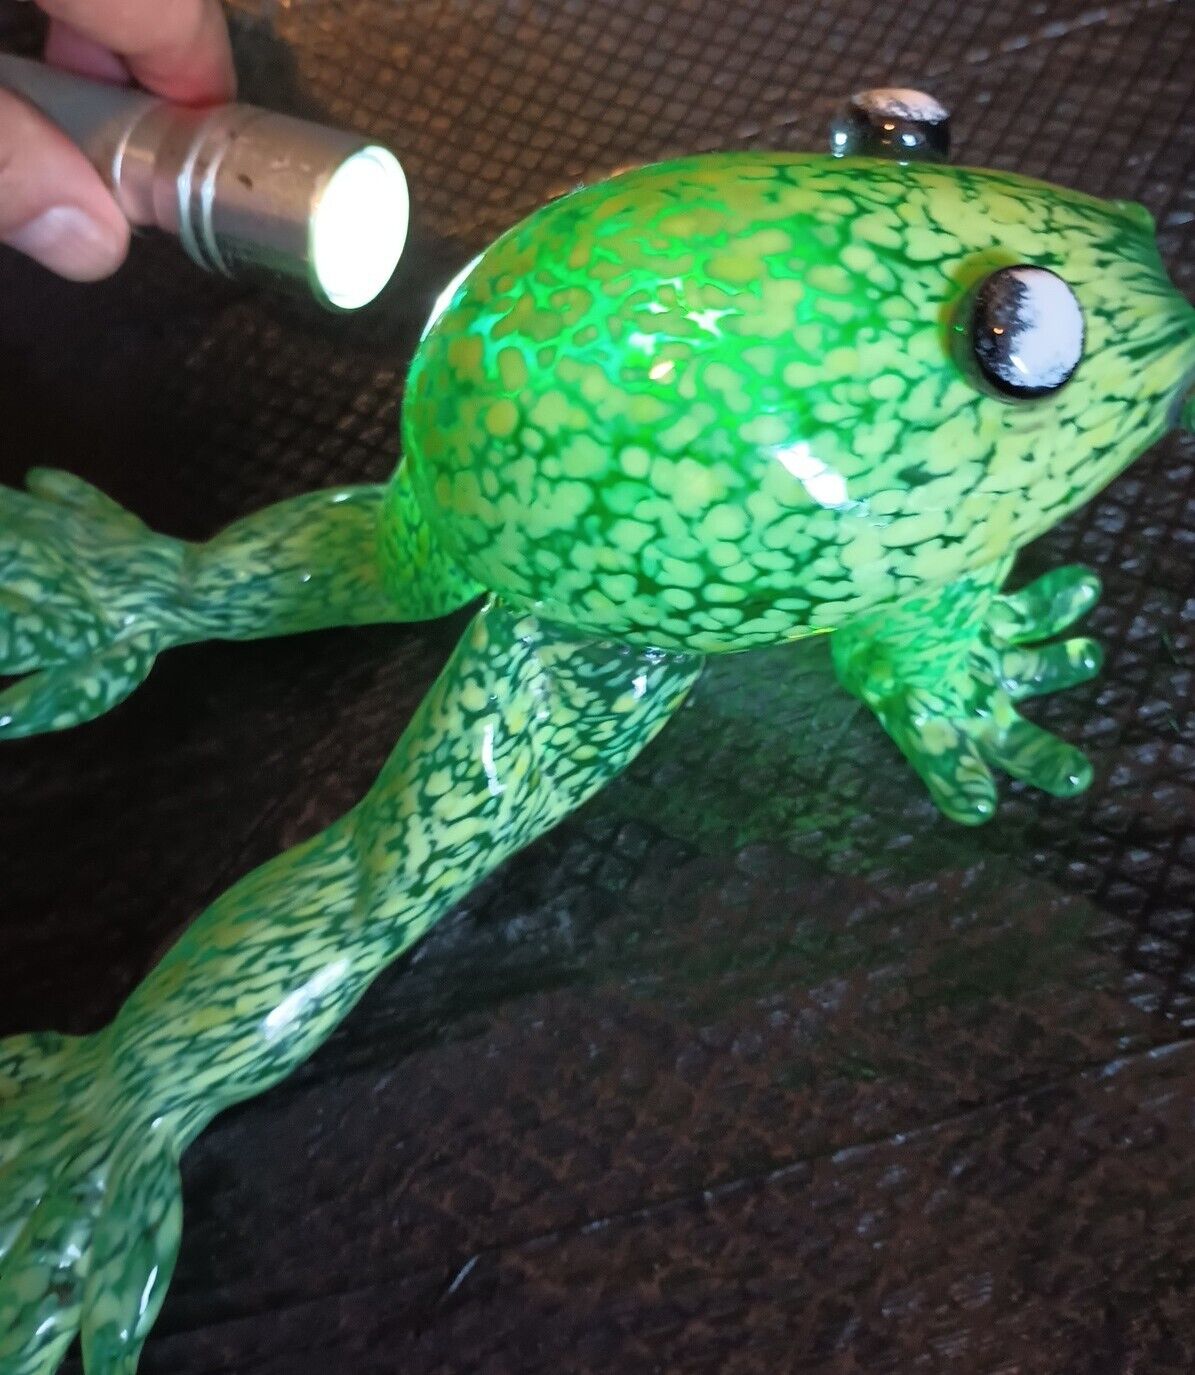 Artist Signed David Glass Hand Blown Green Frog Art Speckled Translucent Deco